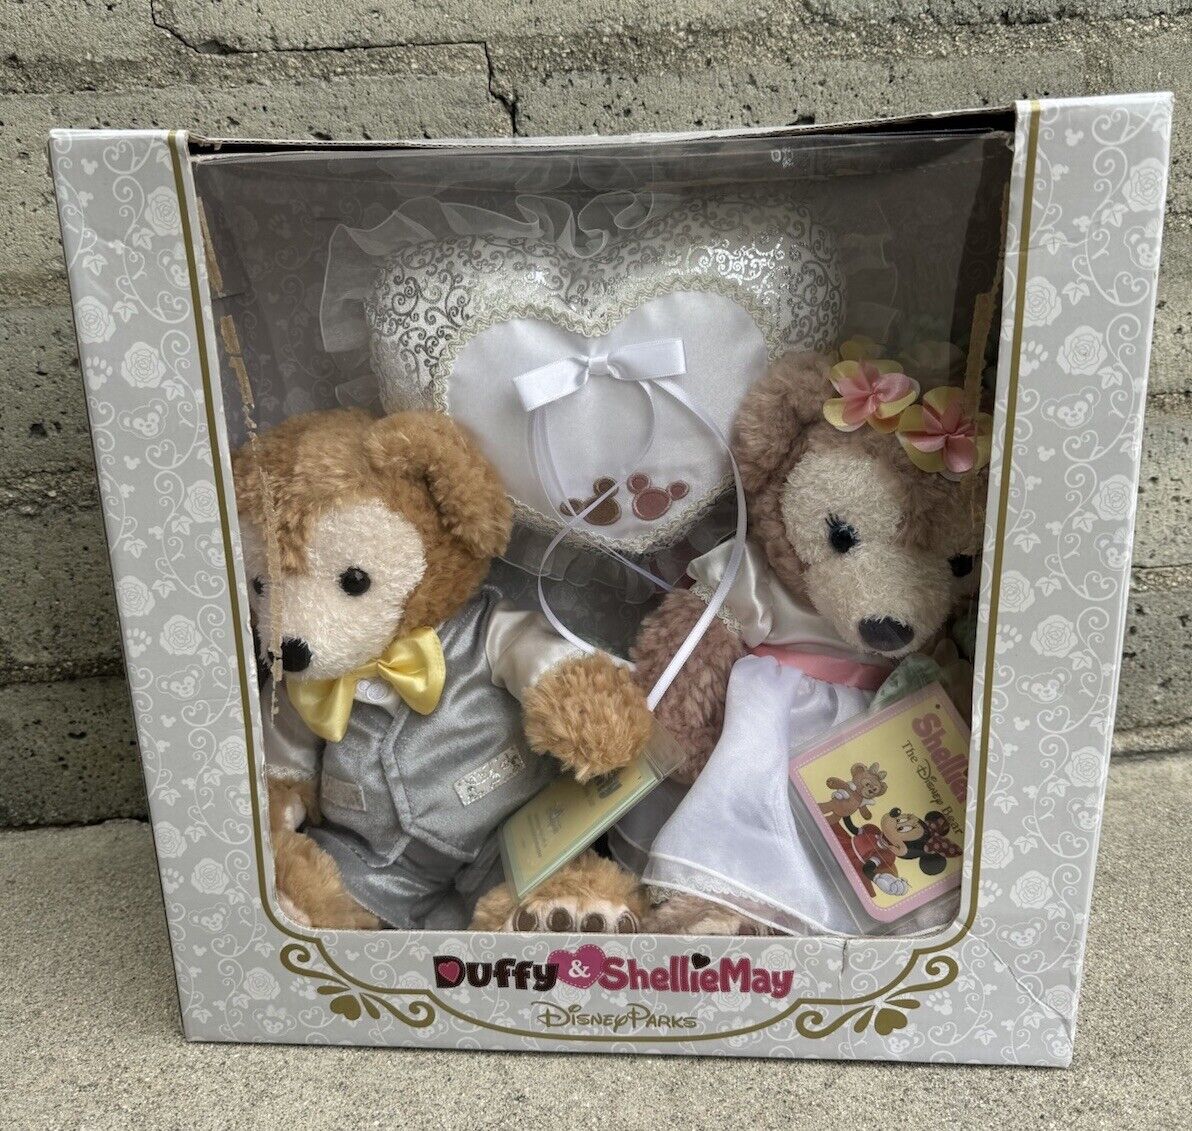 Duffy & ShellieMay Wedding Disney Parks Resort Hong Kong Plush Bear Set NEW OPEN